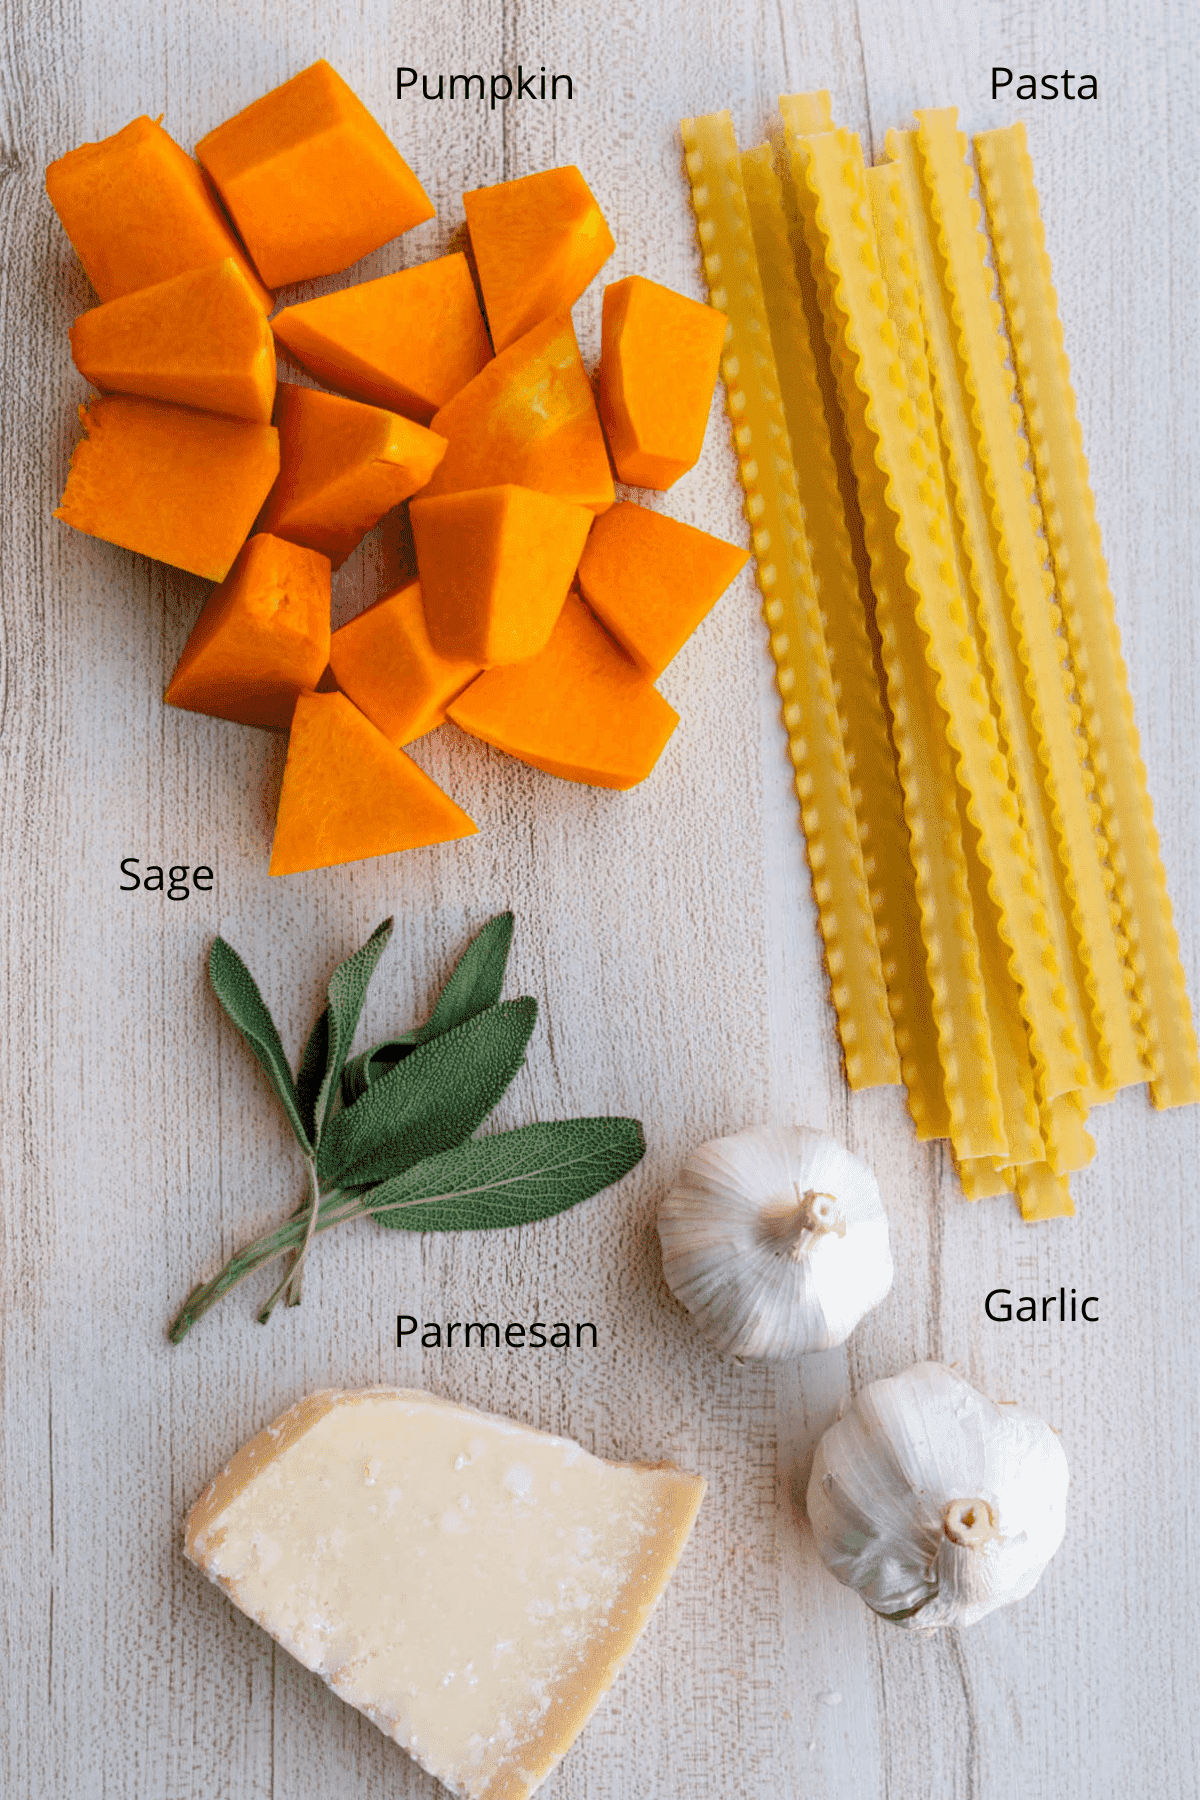 Ingredients to make a creamy pumpkin pasta sauce